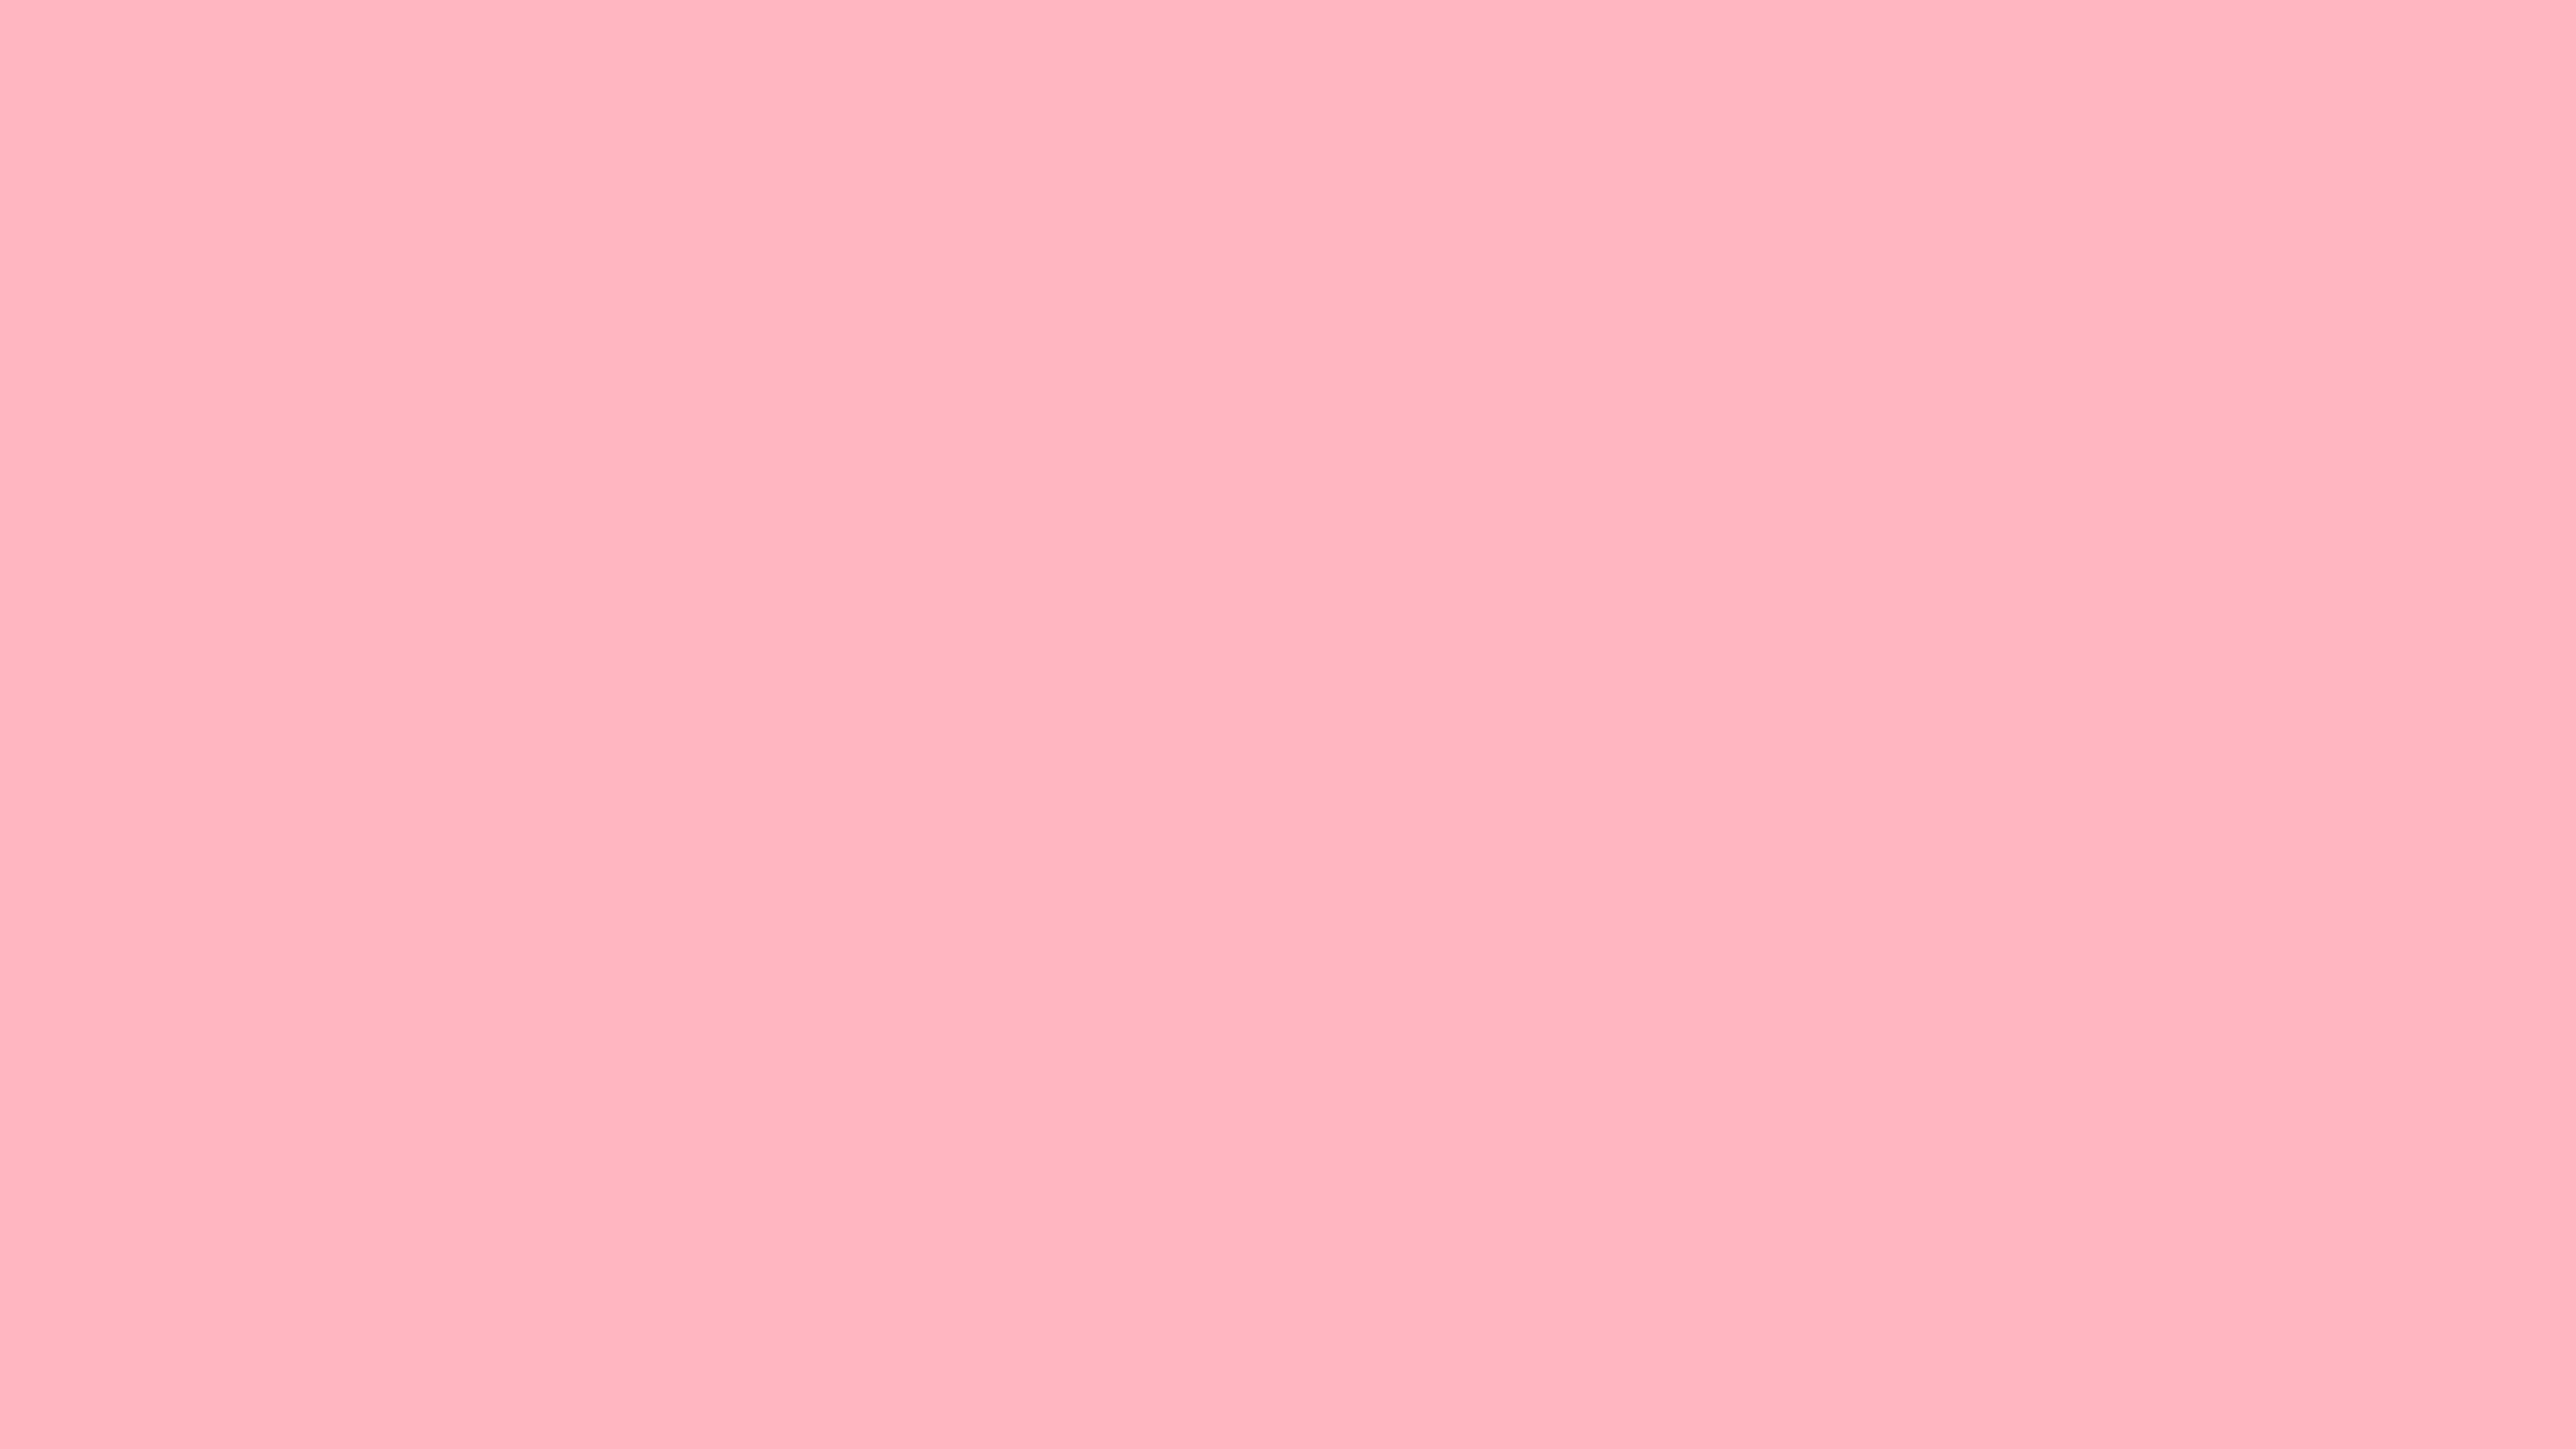 7680x4320 Light Pink Solid Color Background